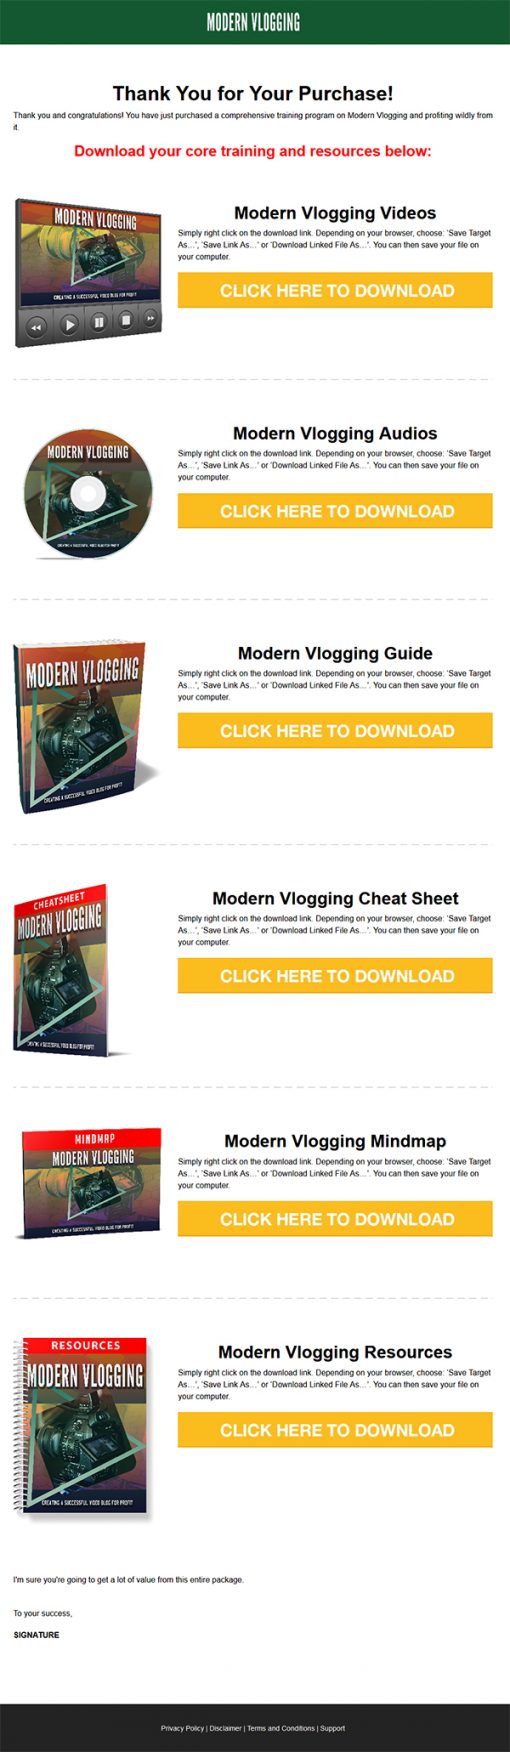 Modern Vlogging Success Ebook and Videos MRR